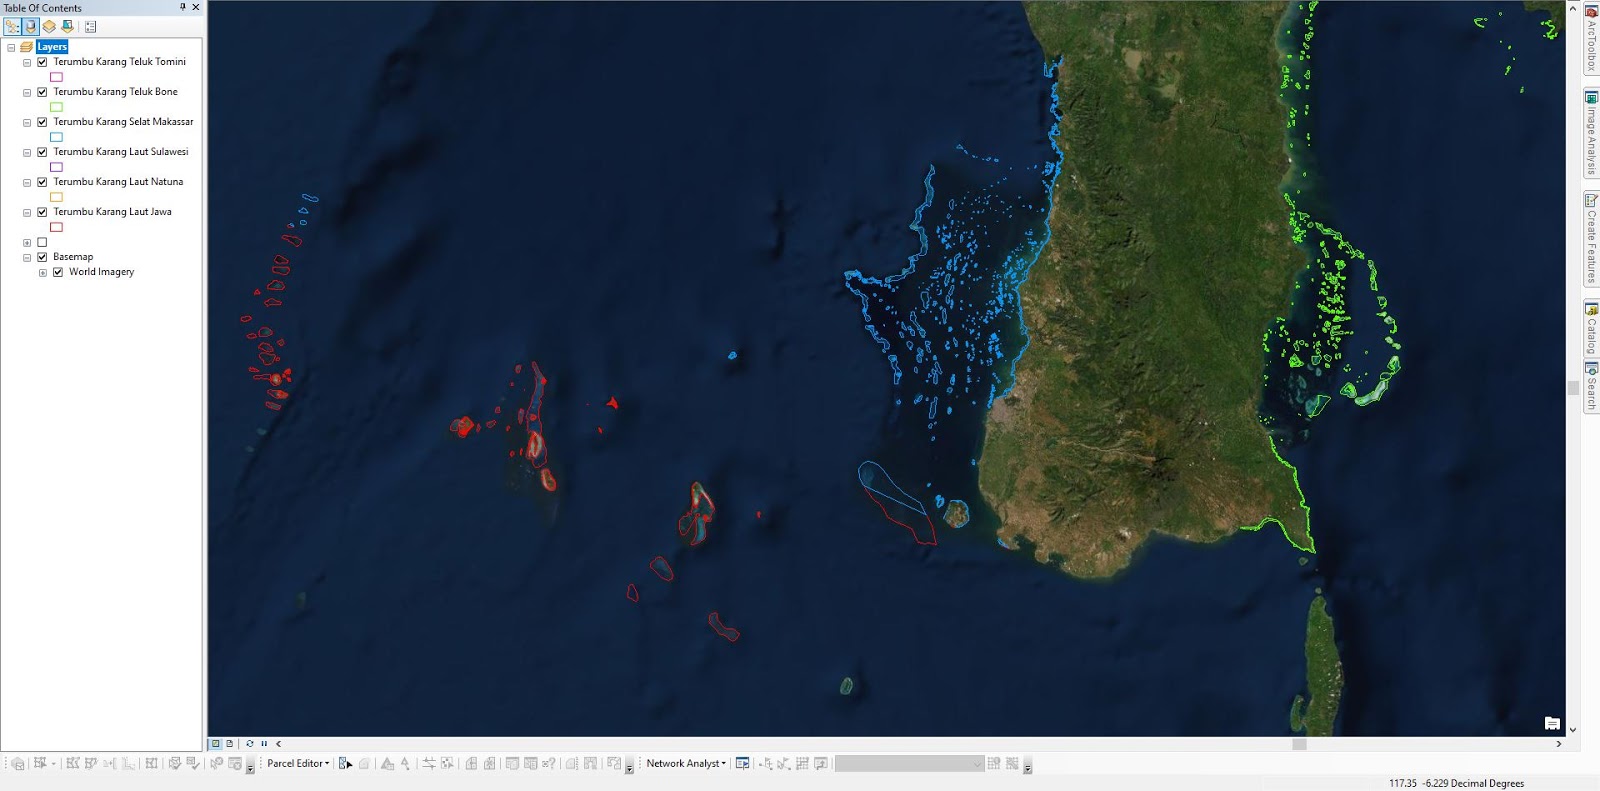 Data Shapefile (SHP) Ekosistem Terumbu Karang Indonesia